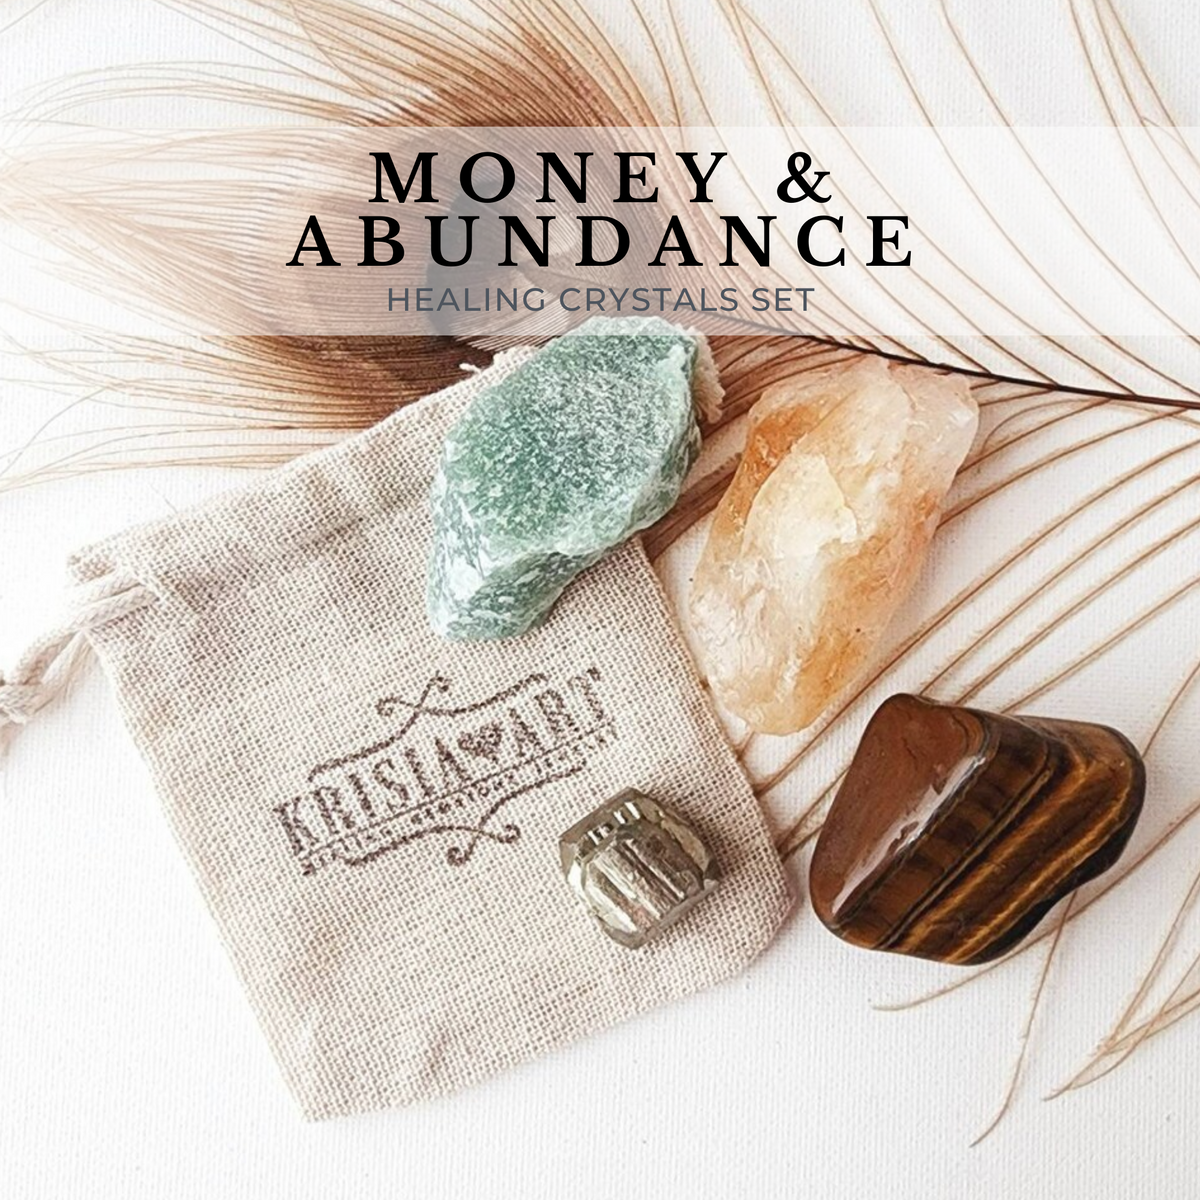 MONEY & ABUNDANCE crystal set for attracting wealth, abundance, manifesting prosperity and success. Citrine, Pyrite, Tiger's Eye, Green Aventurine